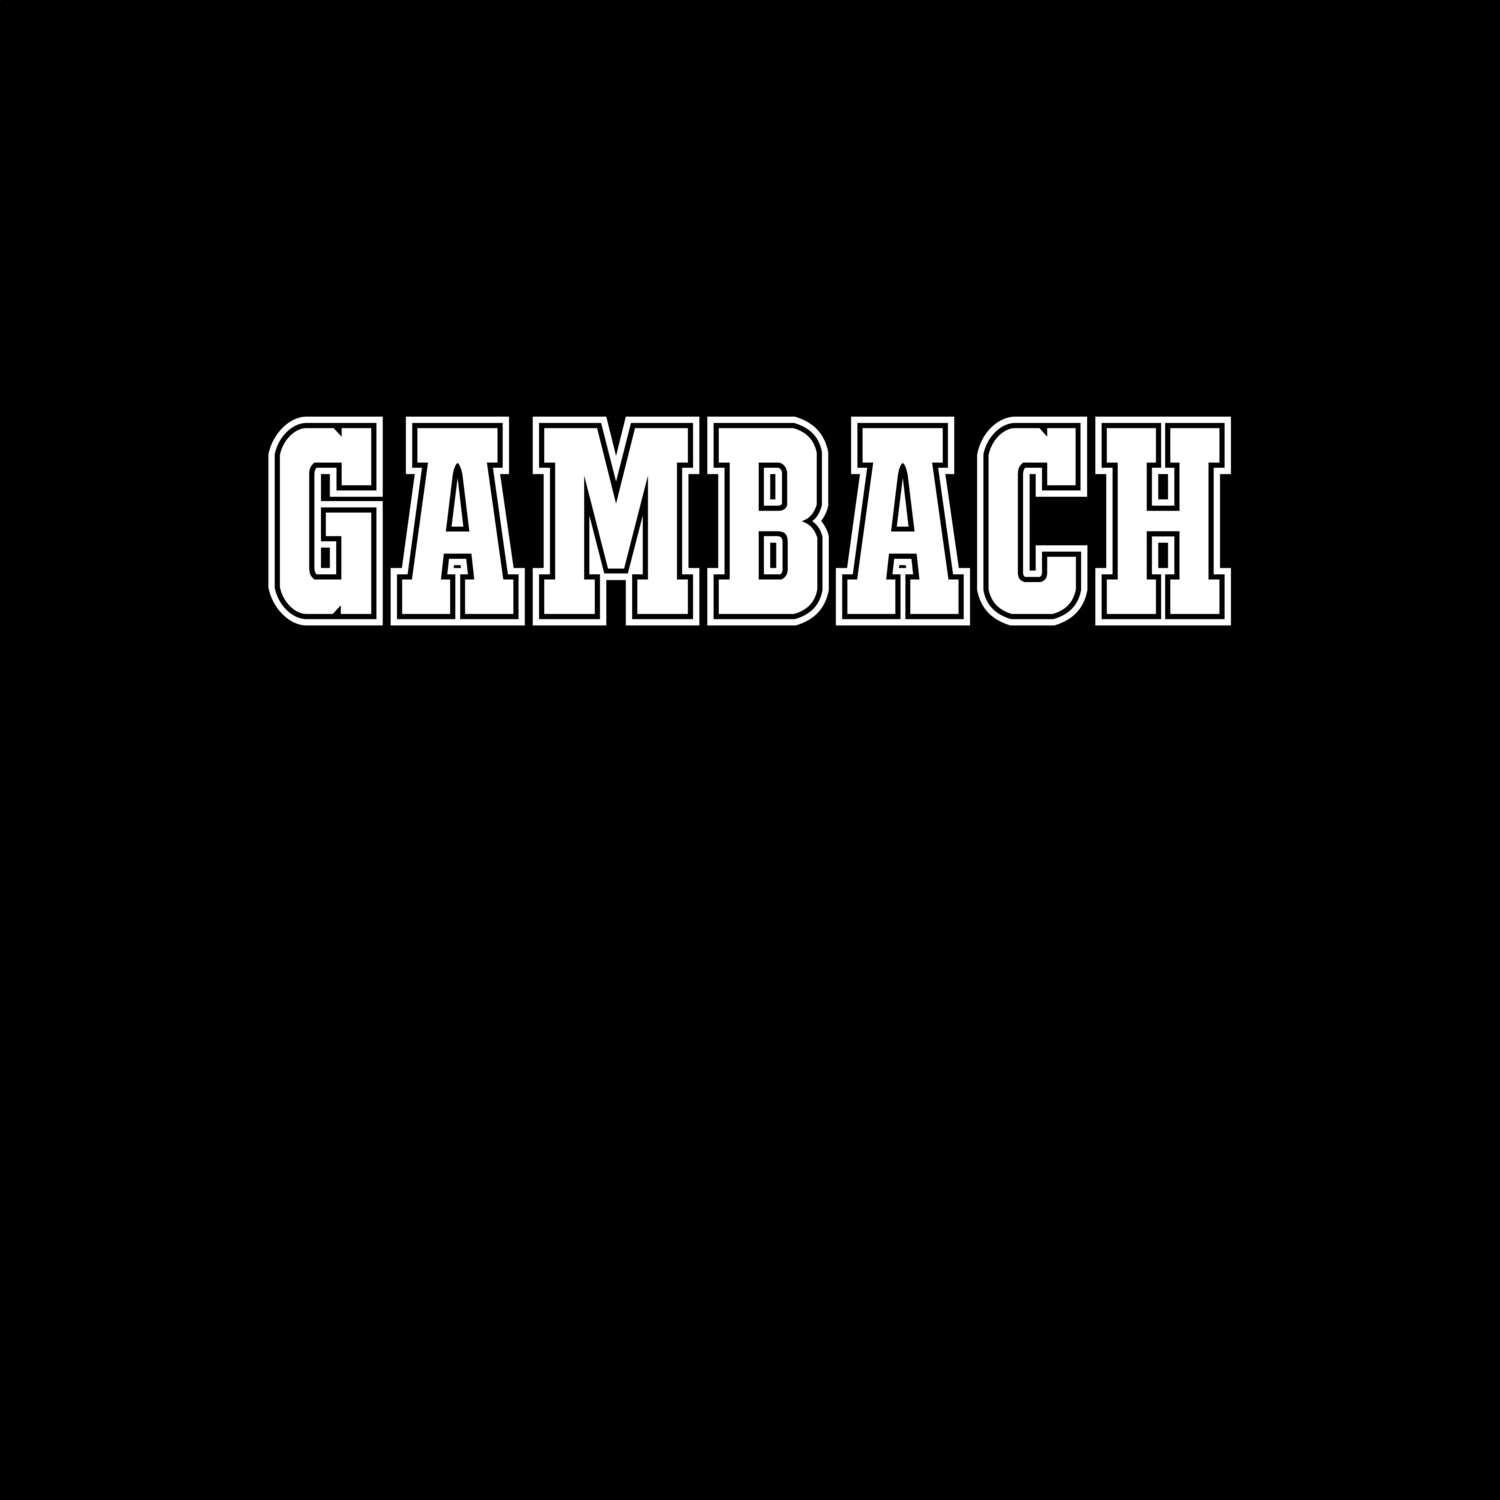 Gambach T-Shirt »Classic«